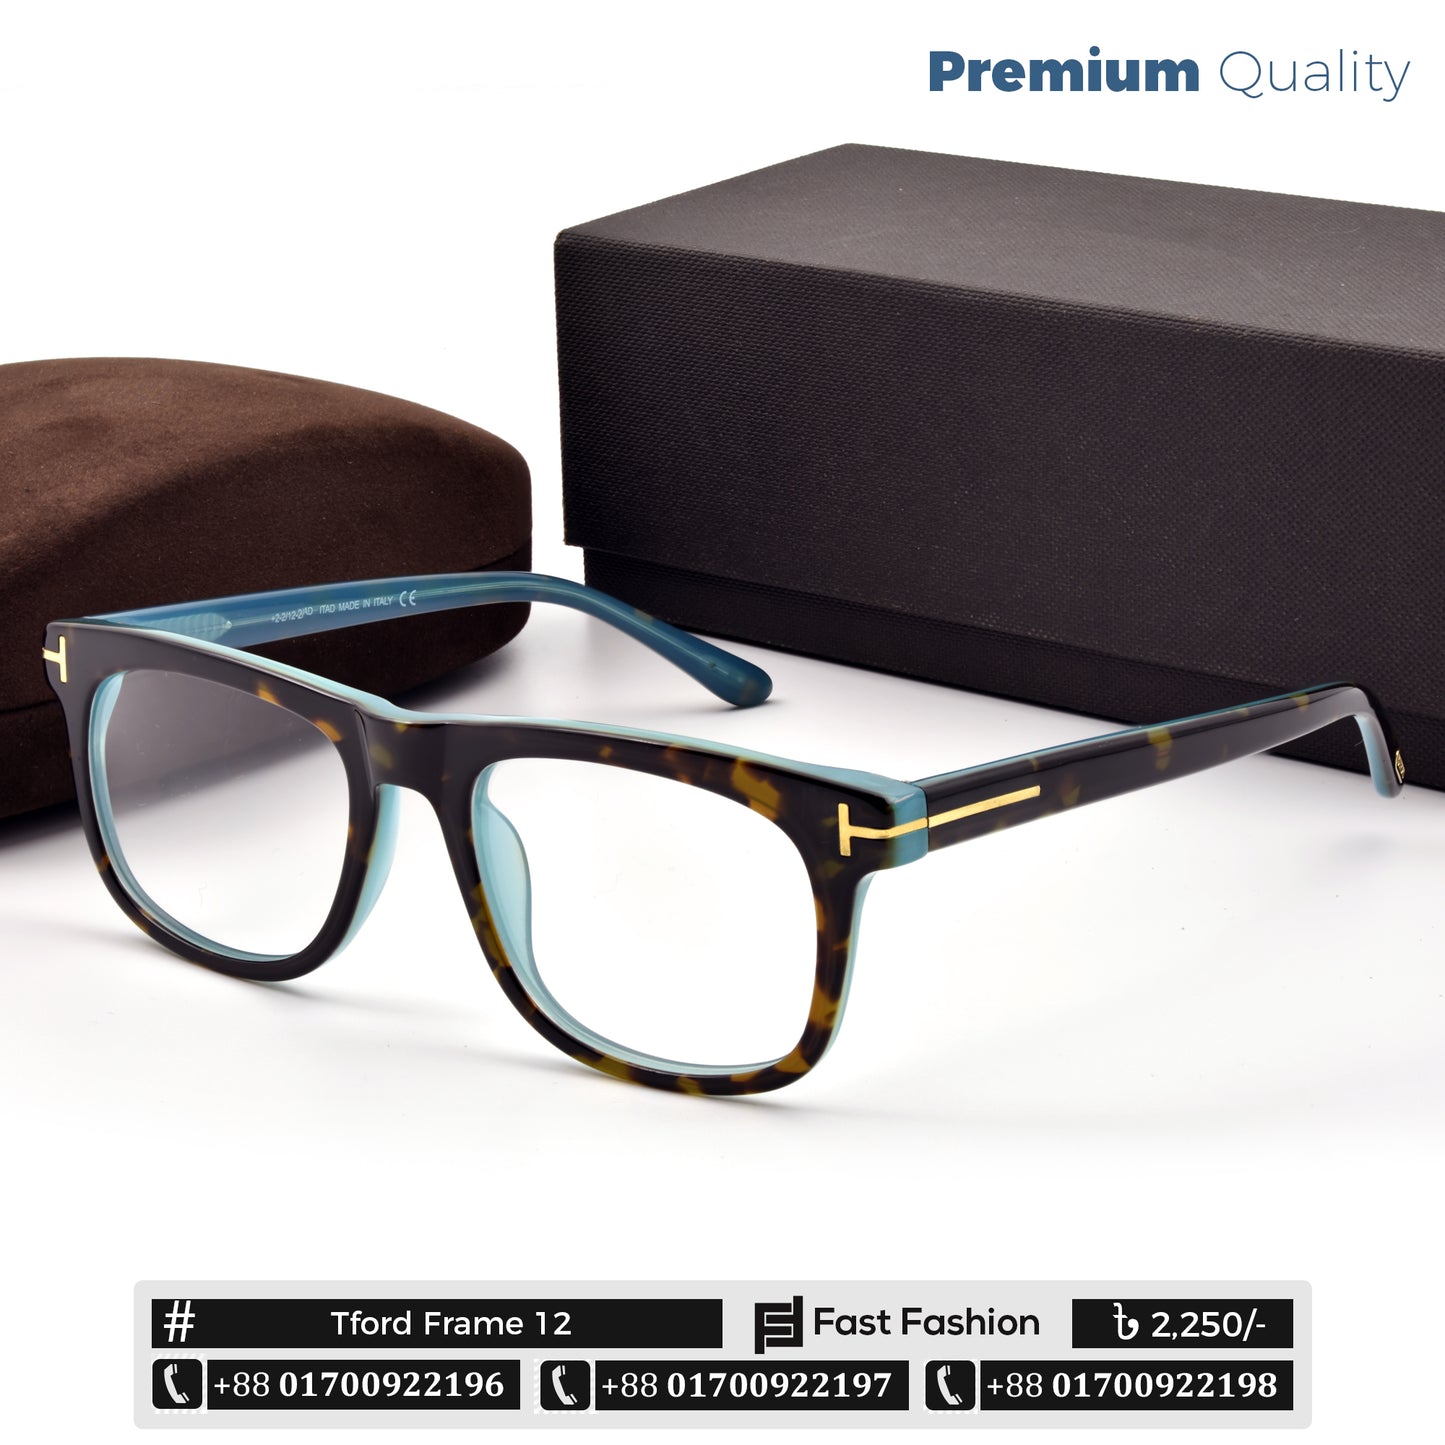 Trendy Stylish Optic Frame | TFord Frame 12 | Premium Quality